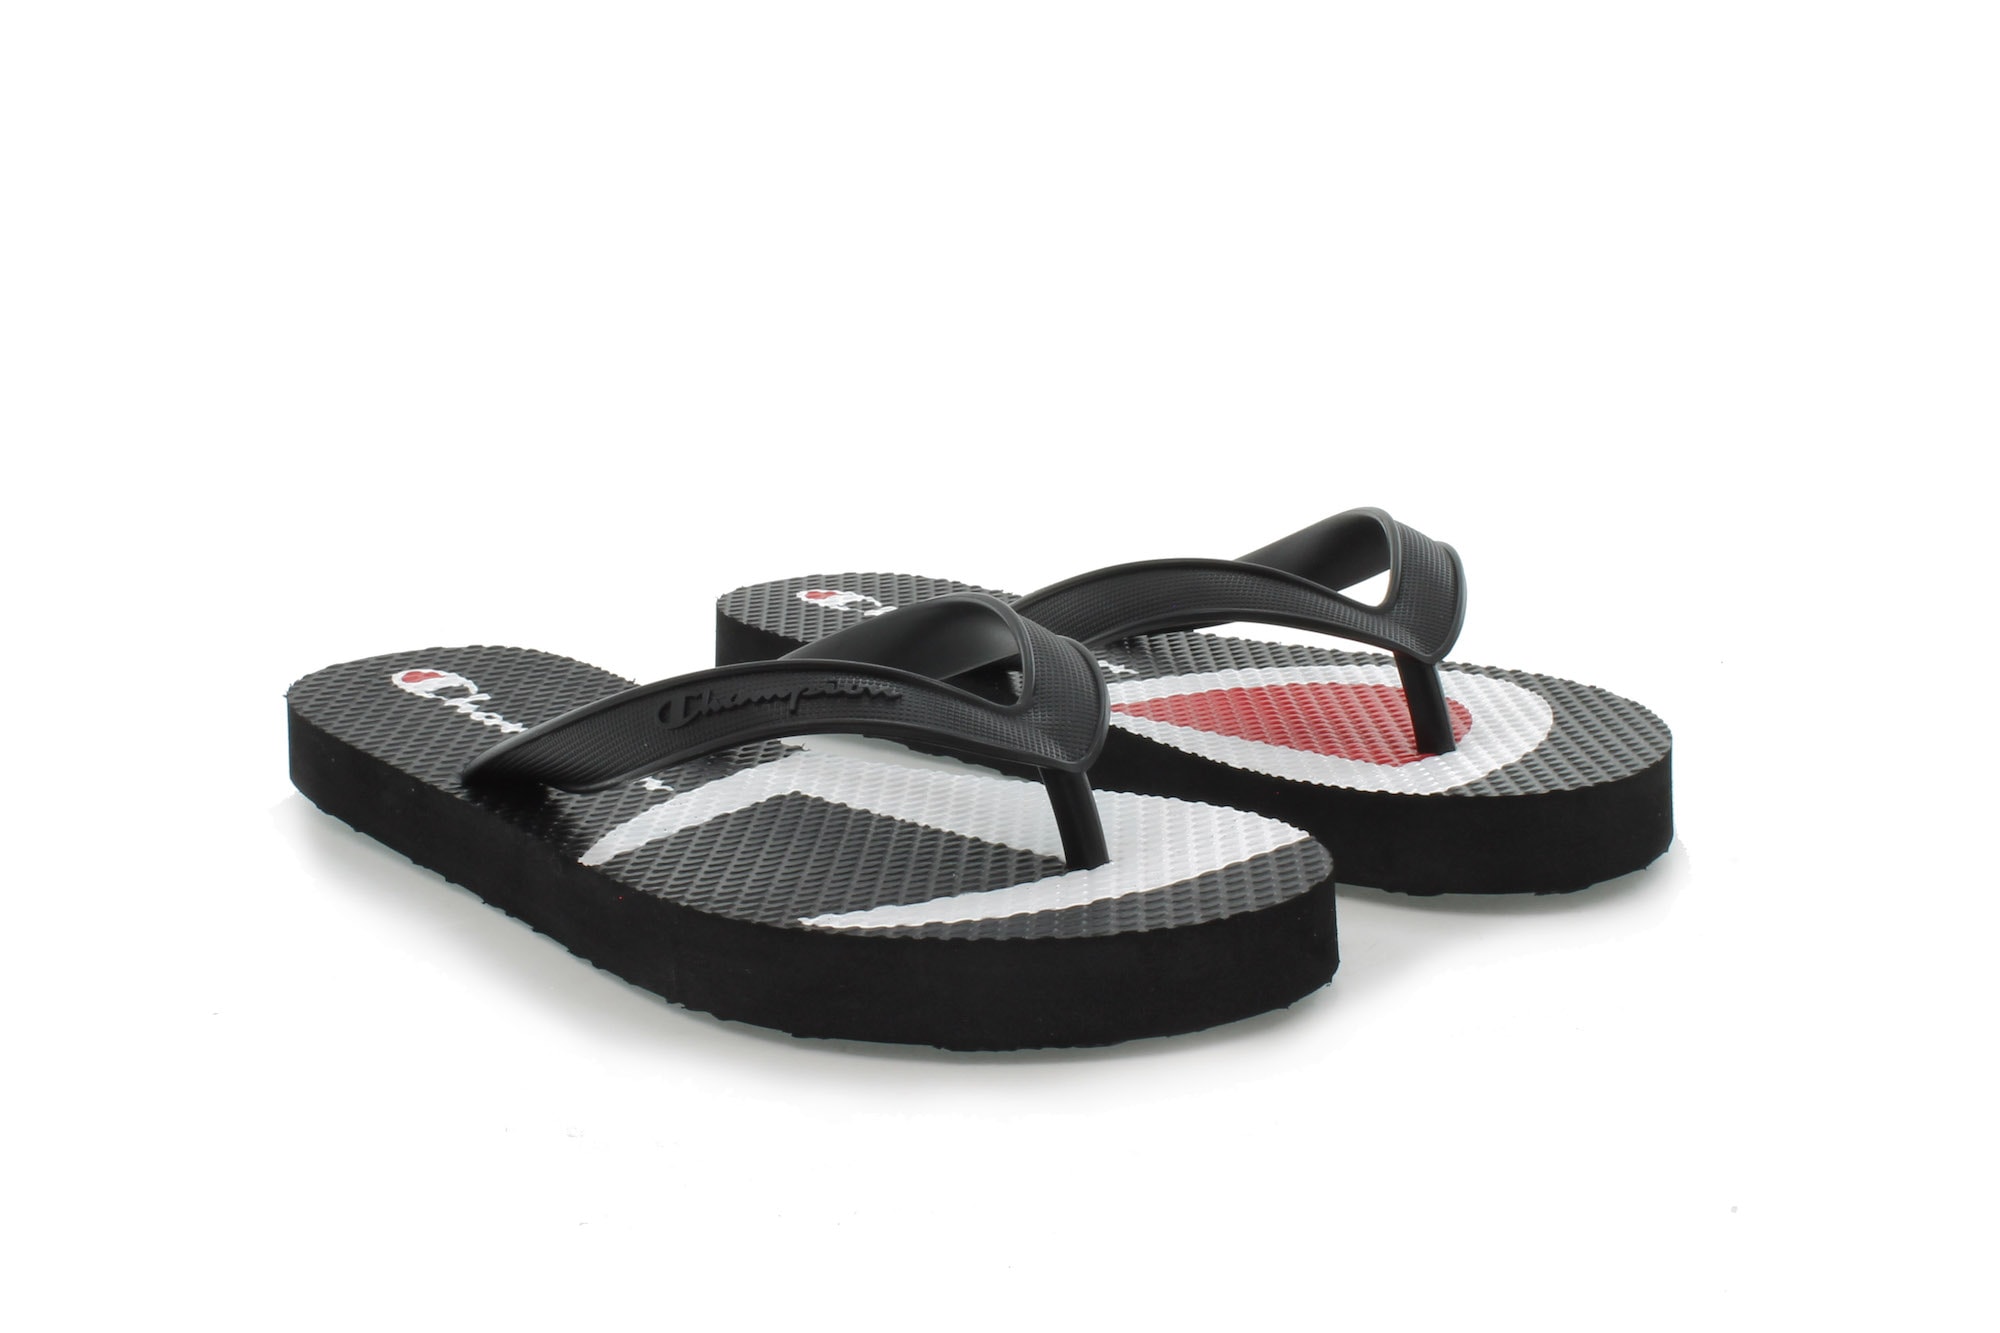 Champion Logo Slides and Flip Flops Summer Collection Shoe Pink White Black Purple Pastel Slide Sandal Shoe Pool Beach